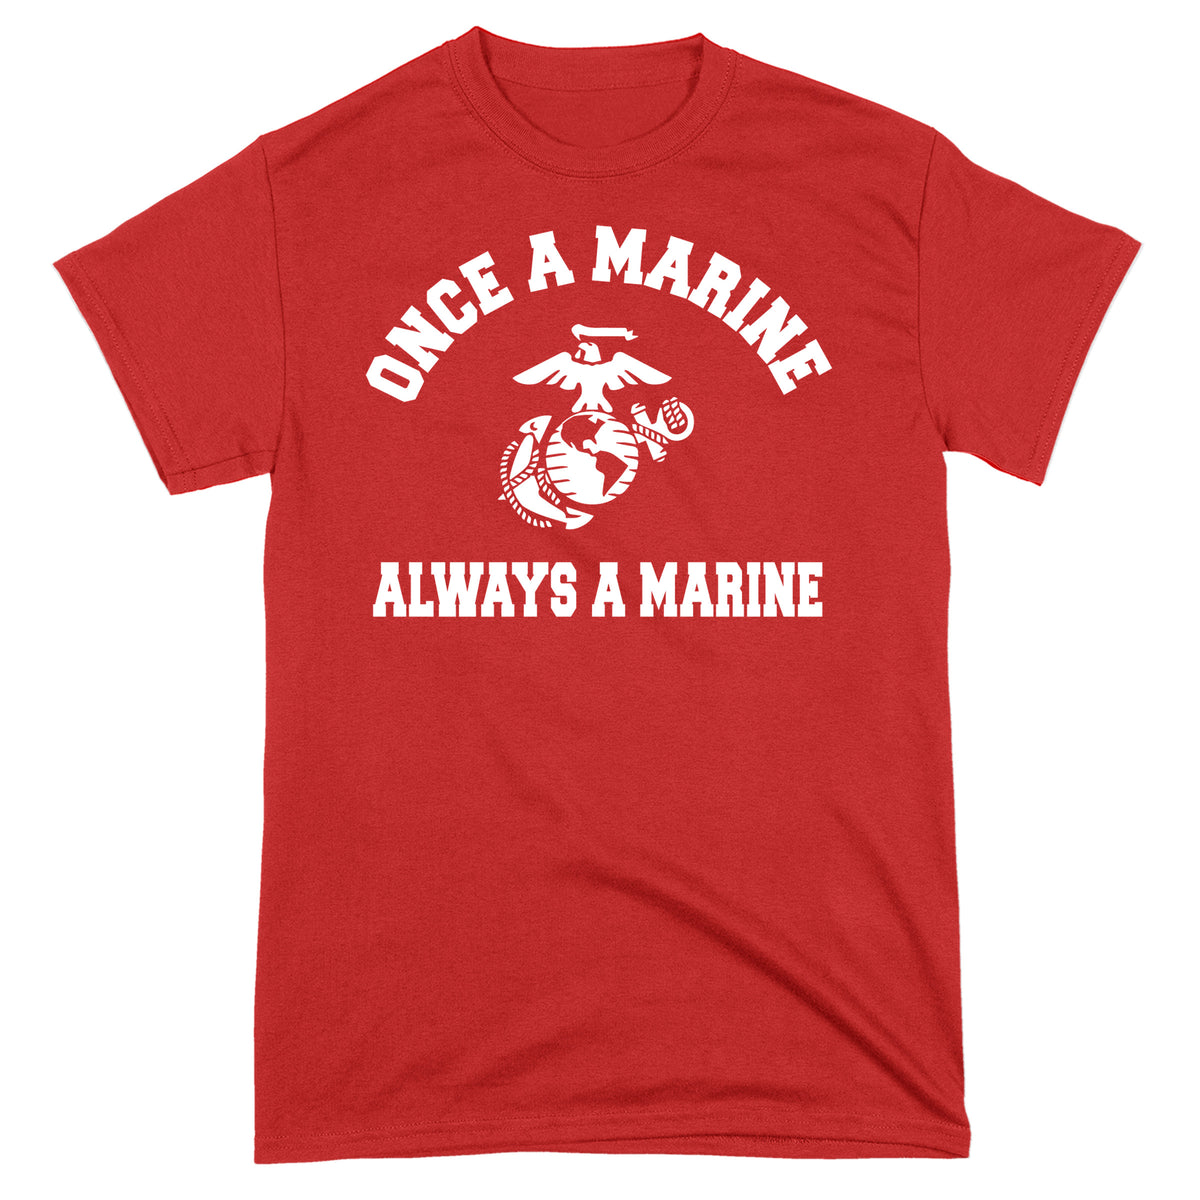 White Once A Marine, Always A Marine Tee